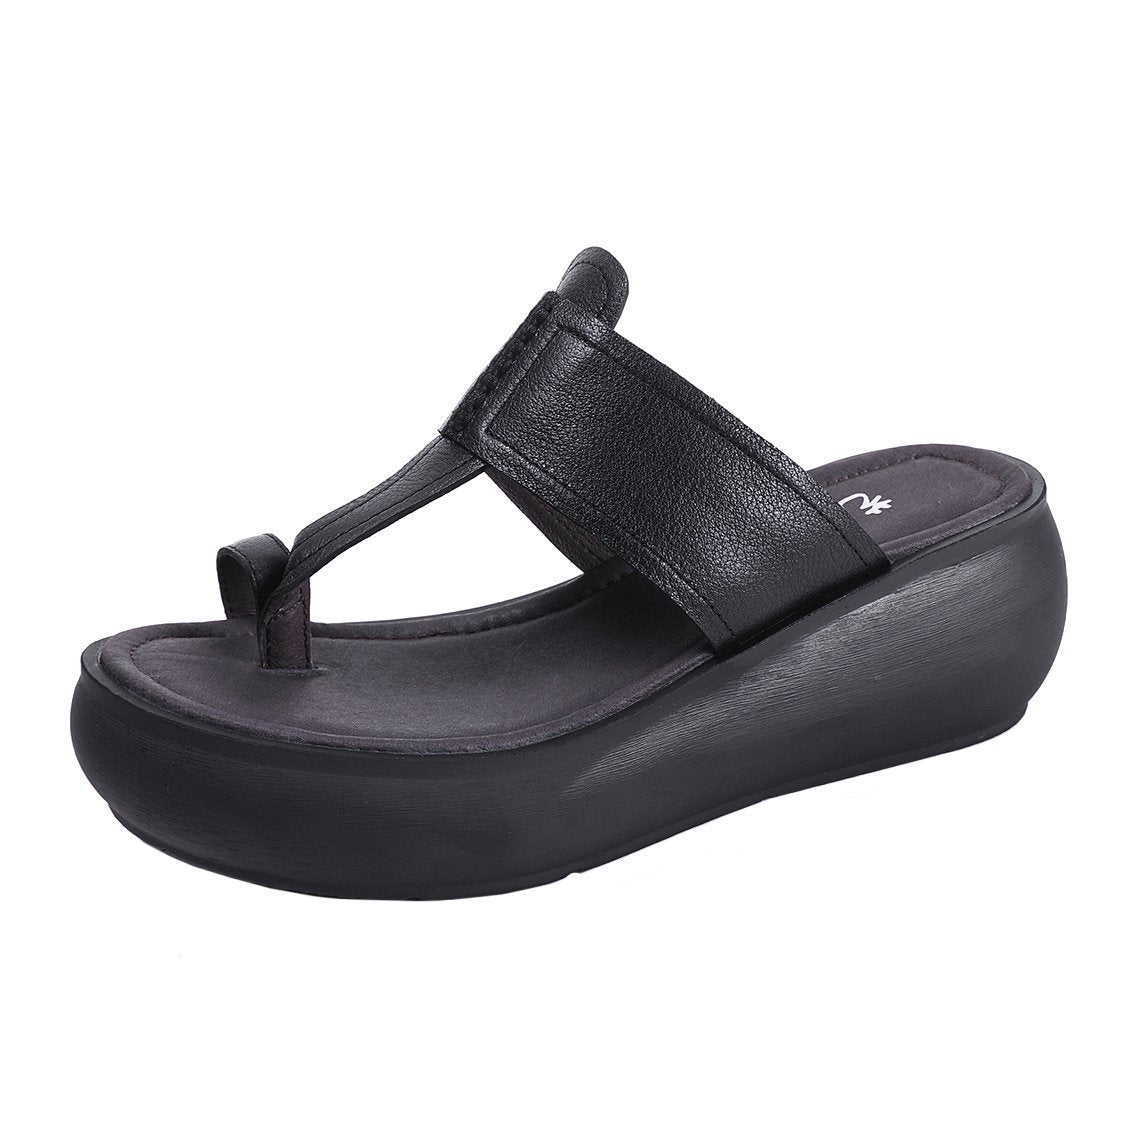 Babakud Leather Platform Retro Leisure Comfortable Slippers 2019 July New 